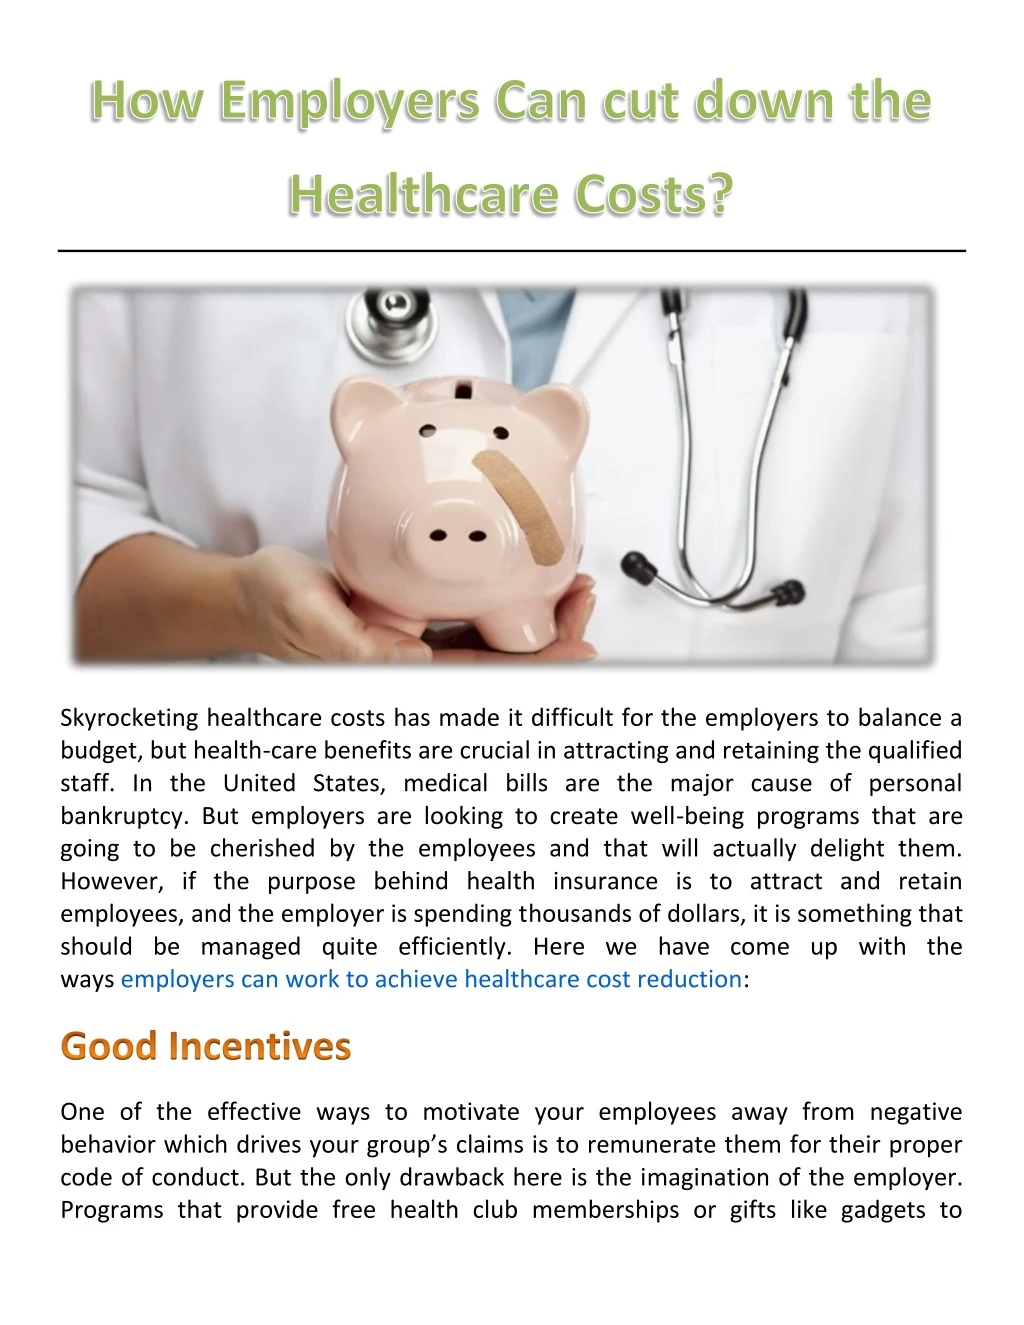 skyrocketing healthcare costs has made